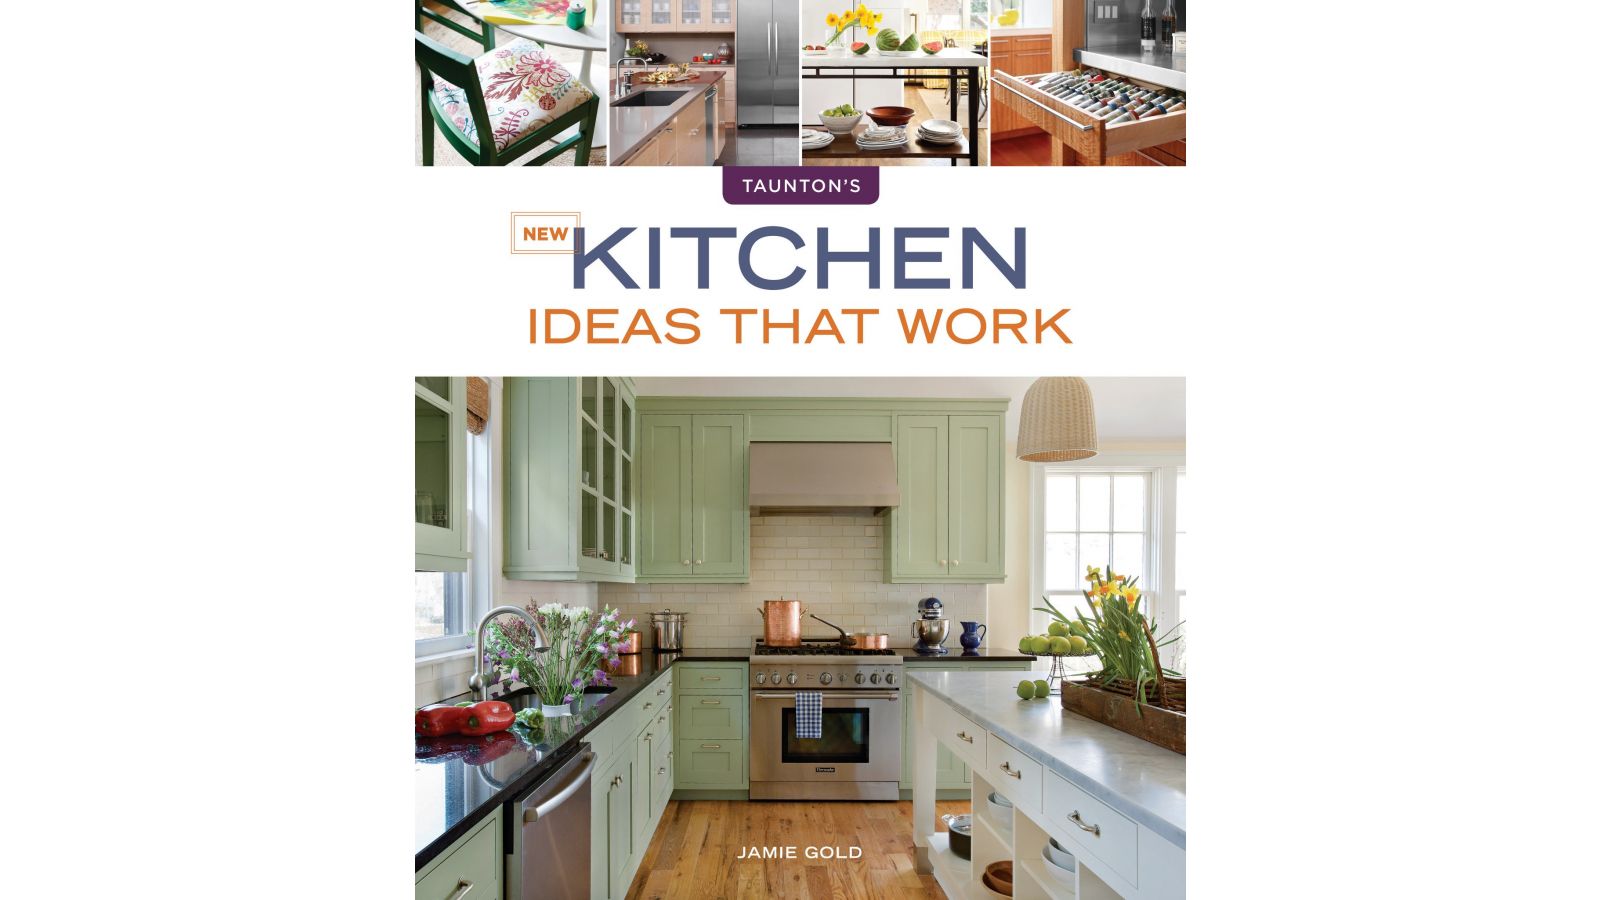 New Kitchen Ideas That Work (Taunton Press, 2012)